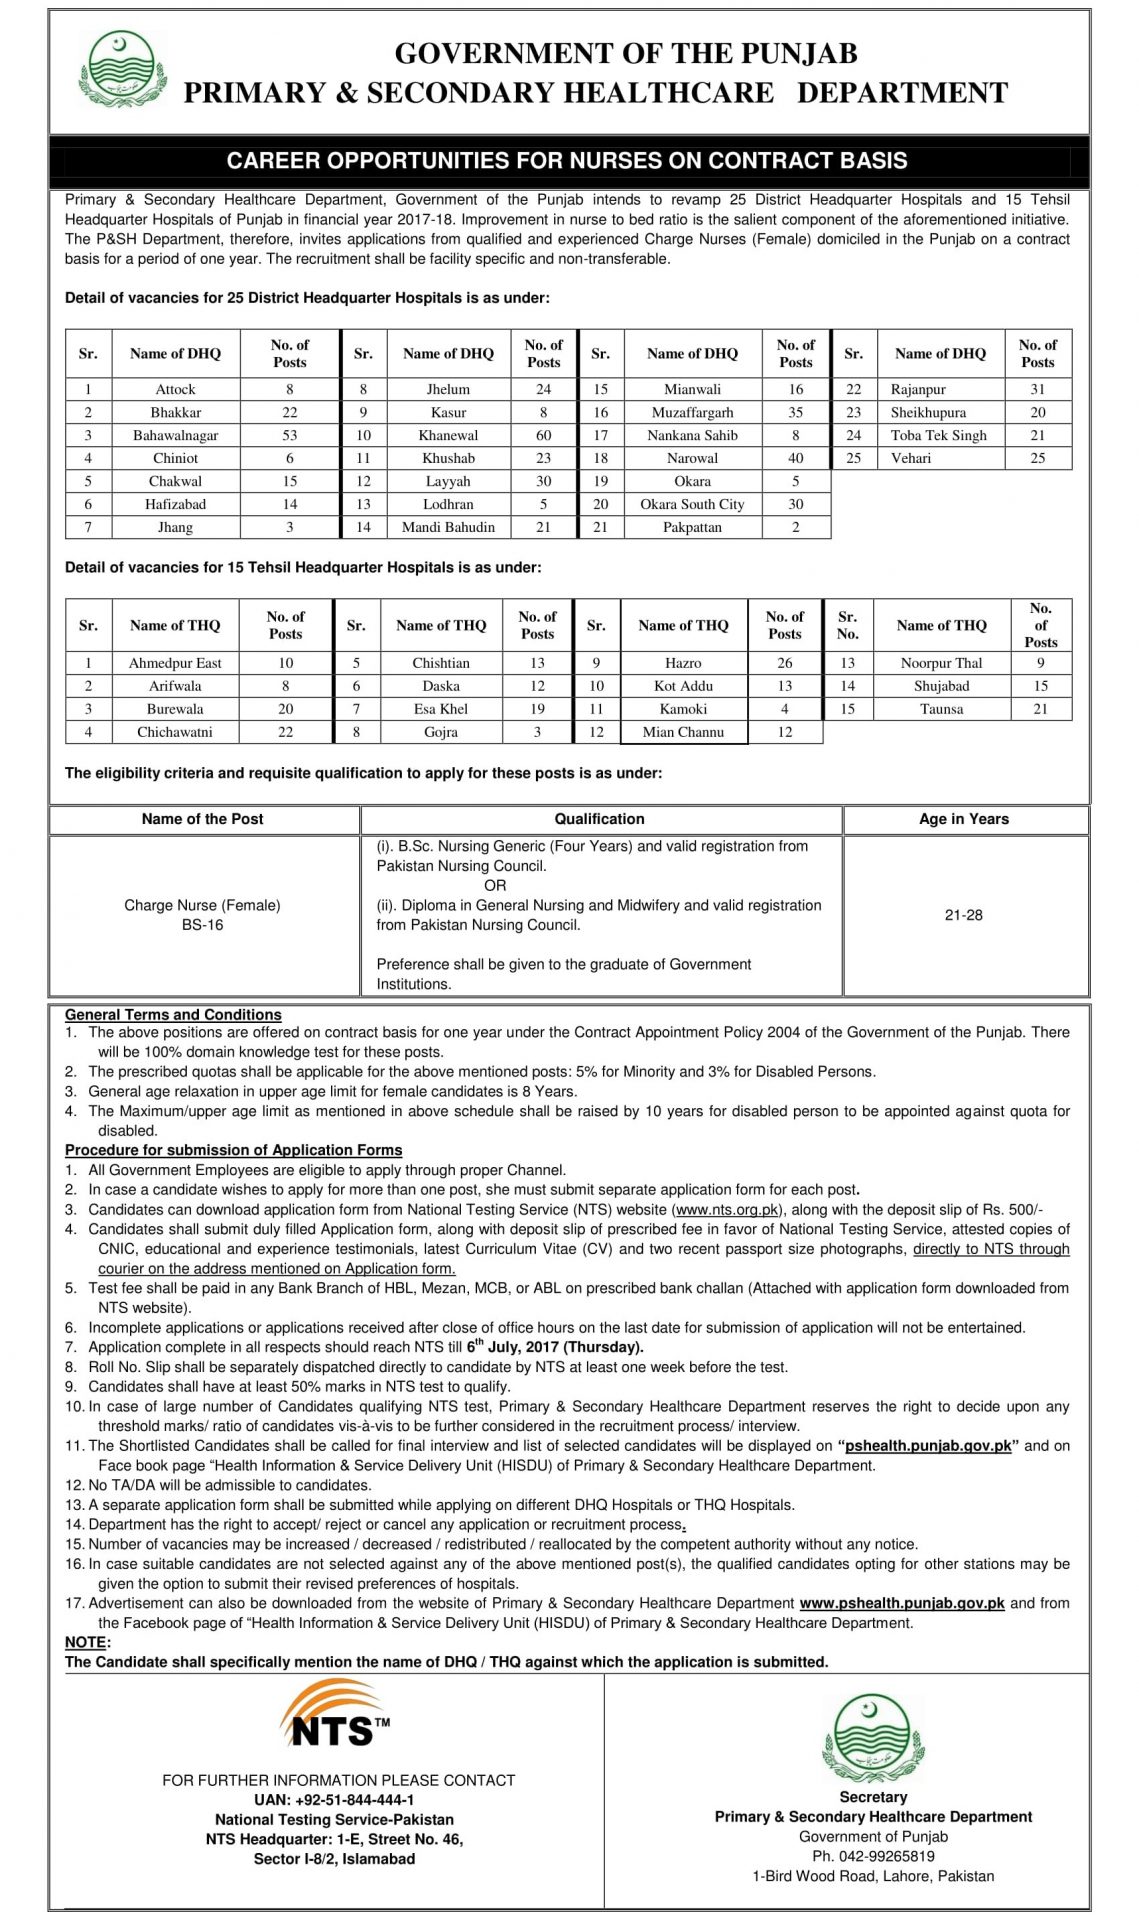 PS Health Punjab Nurses Jobs 2017 NTS Application Form, Test Date, Eligibility